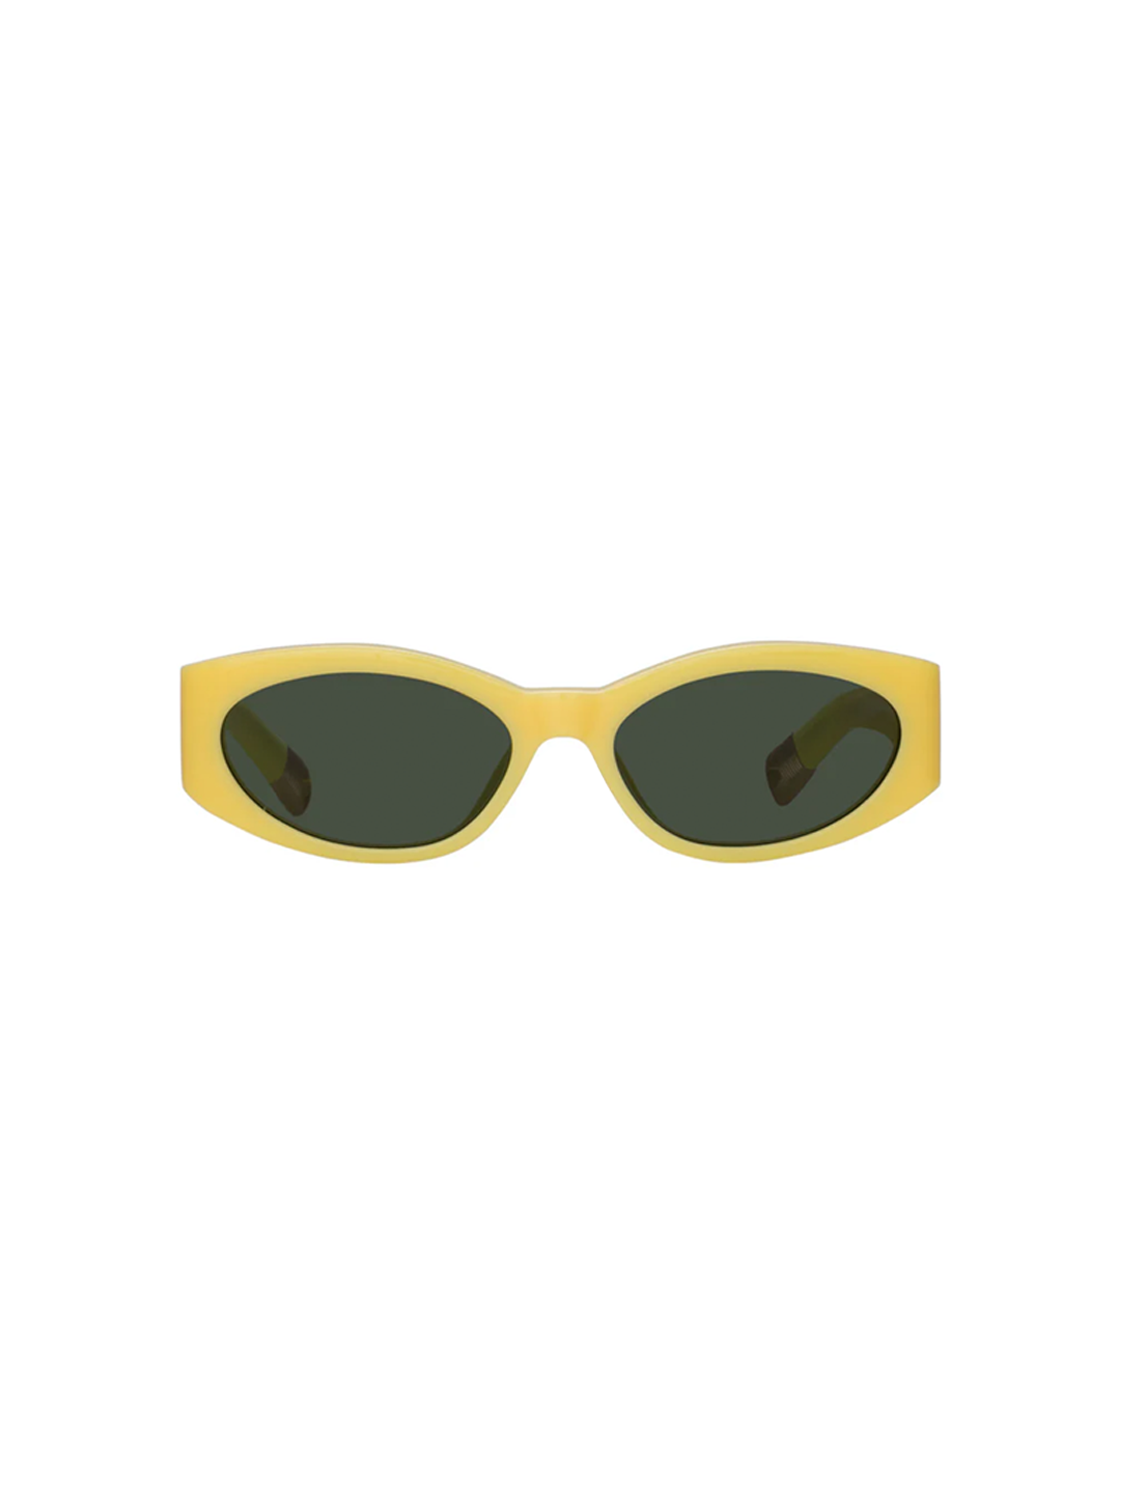 Ovalo – Ovale Sonnenbrille